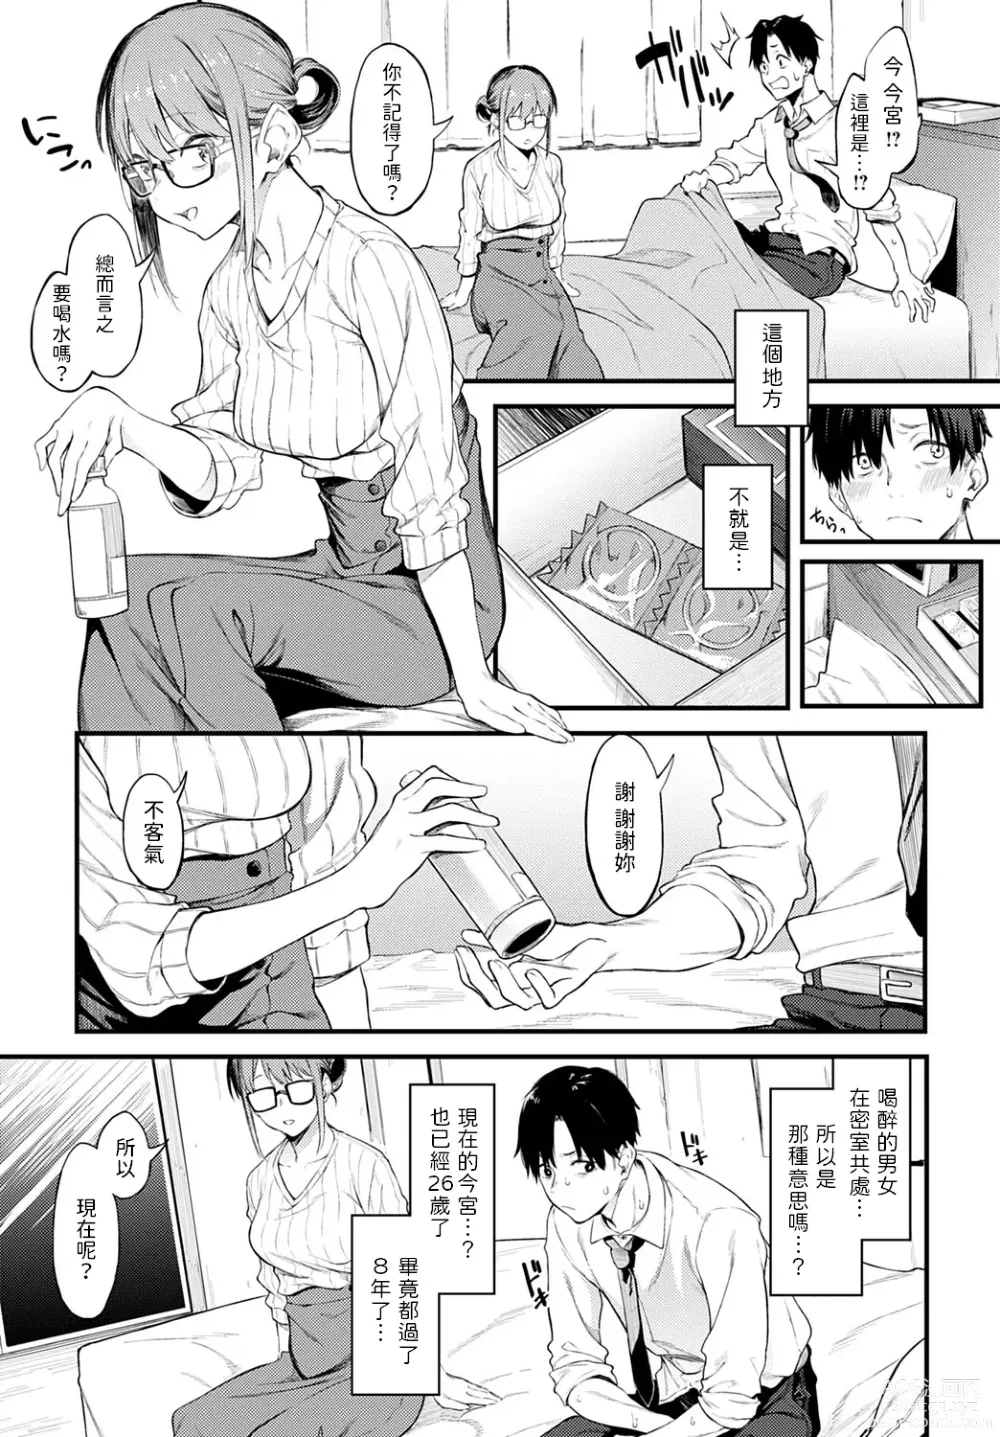 Page 3 of manga Kimi wa Kireida - You are so Beautiful